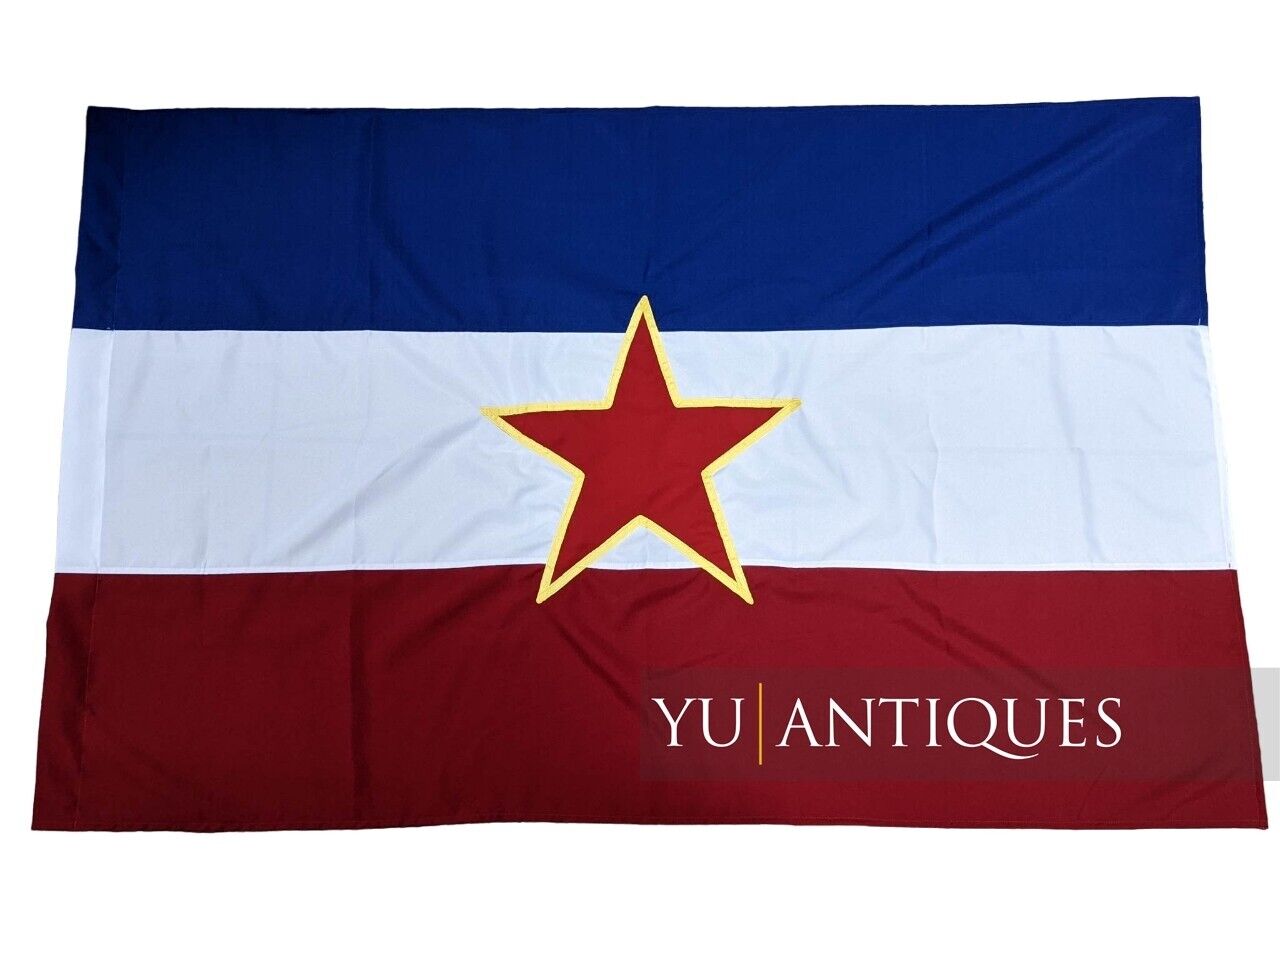 SFRY JNA Yugoslavia Army Tricolor Red Star Flag NEW 140cm x 85cm / 55 x 33inch